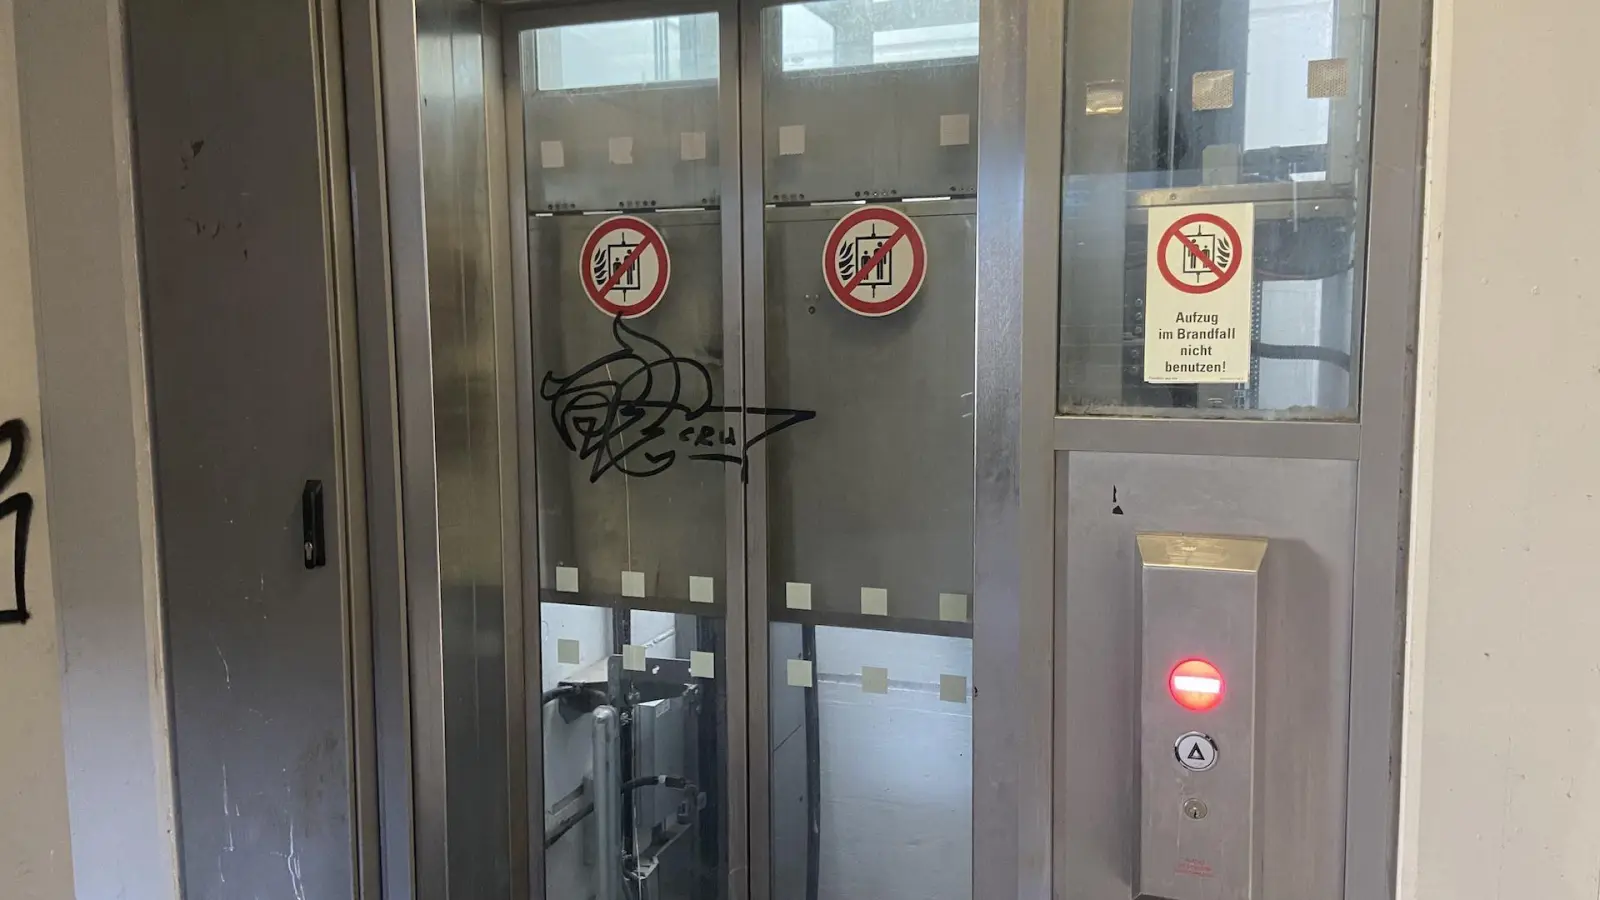 Aufzug am Tauchaer Bahnhof defekt (Foto: taucha-kompakt.de)